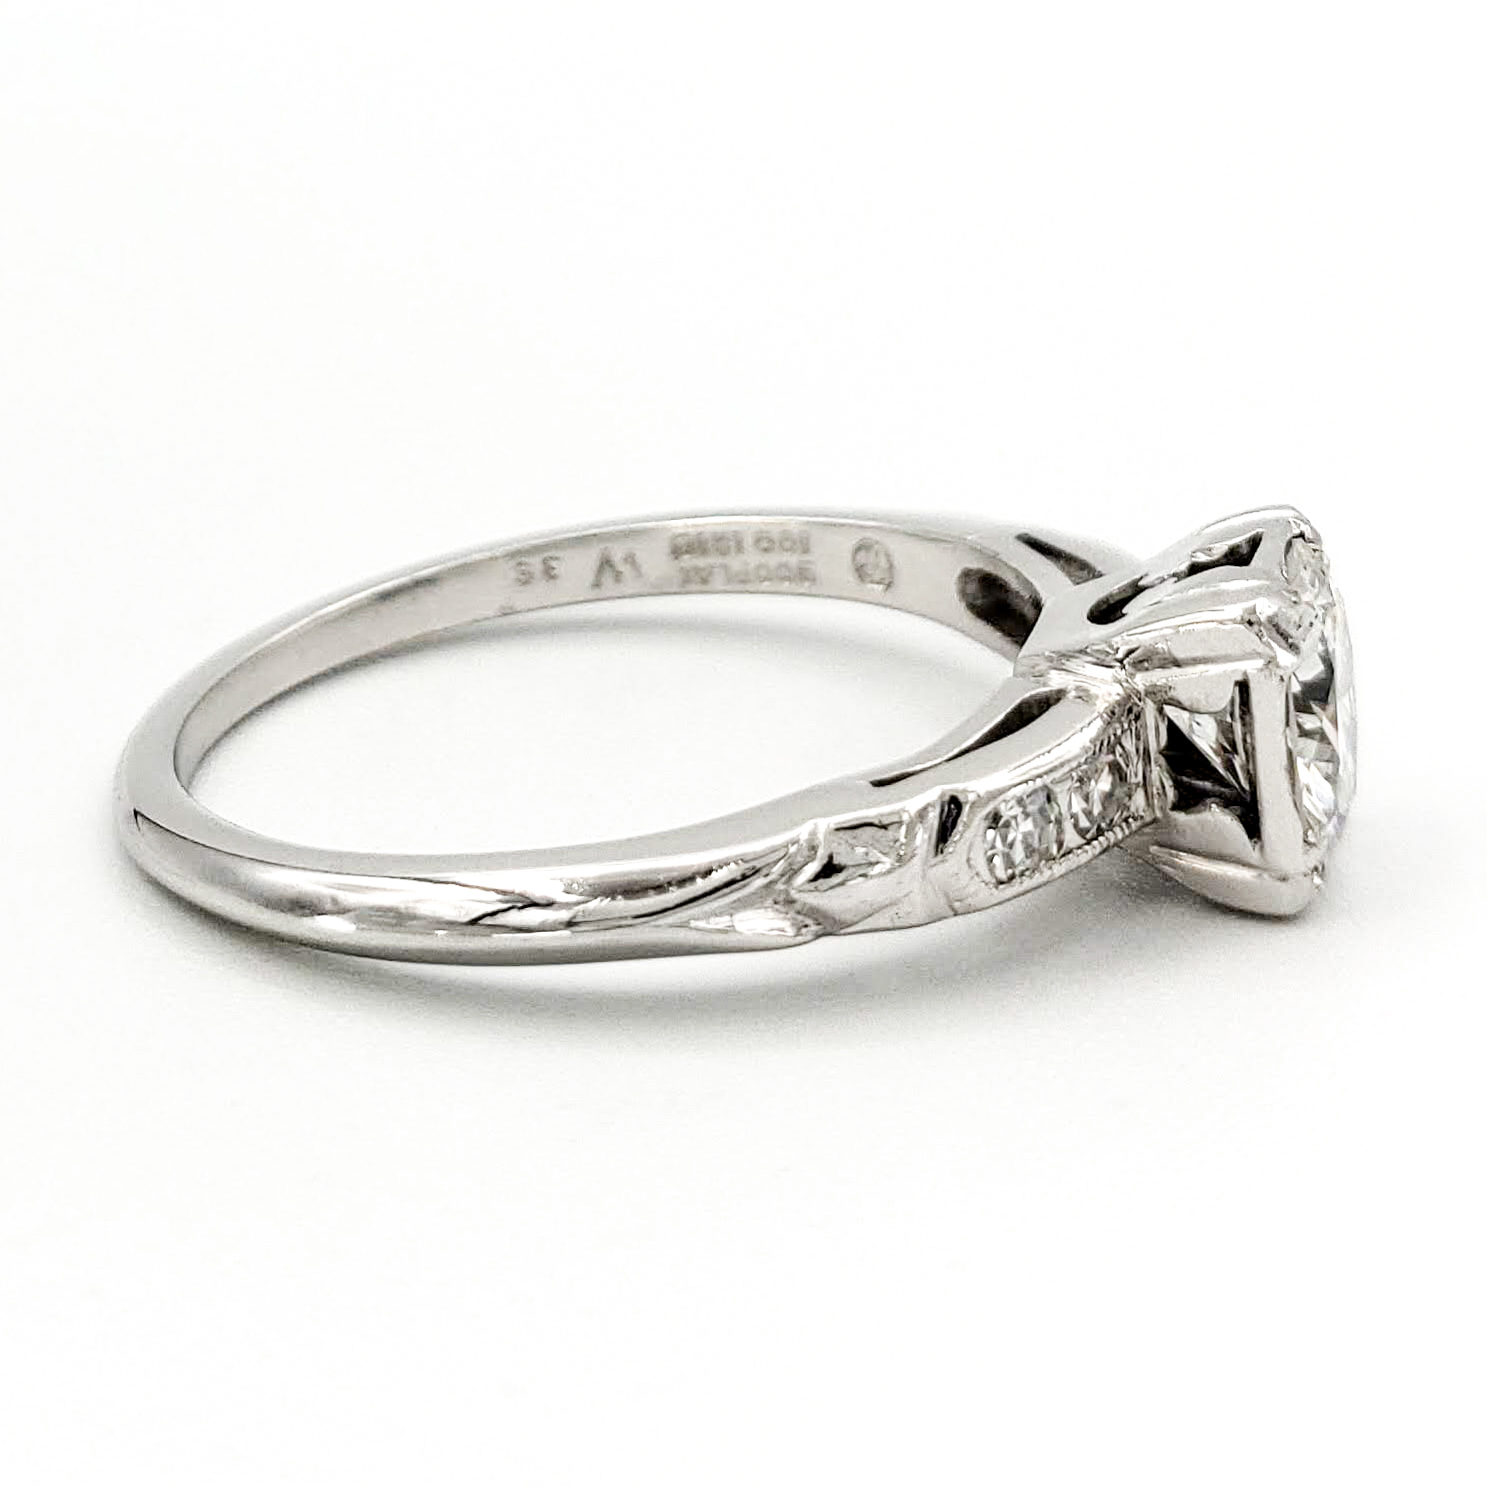 vintage-platinum-engagement-ring-with-0-64-carat-round-brilliant-cut-diamond-egl-e-vs2